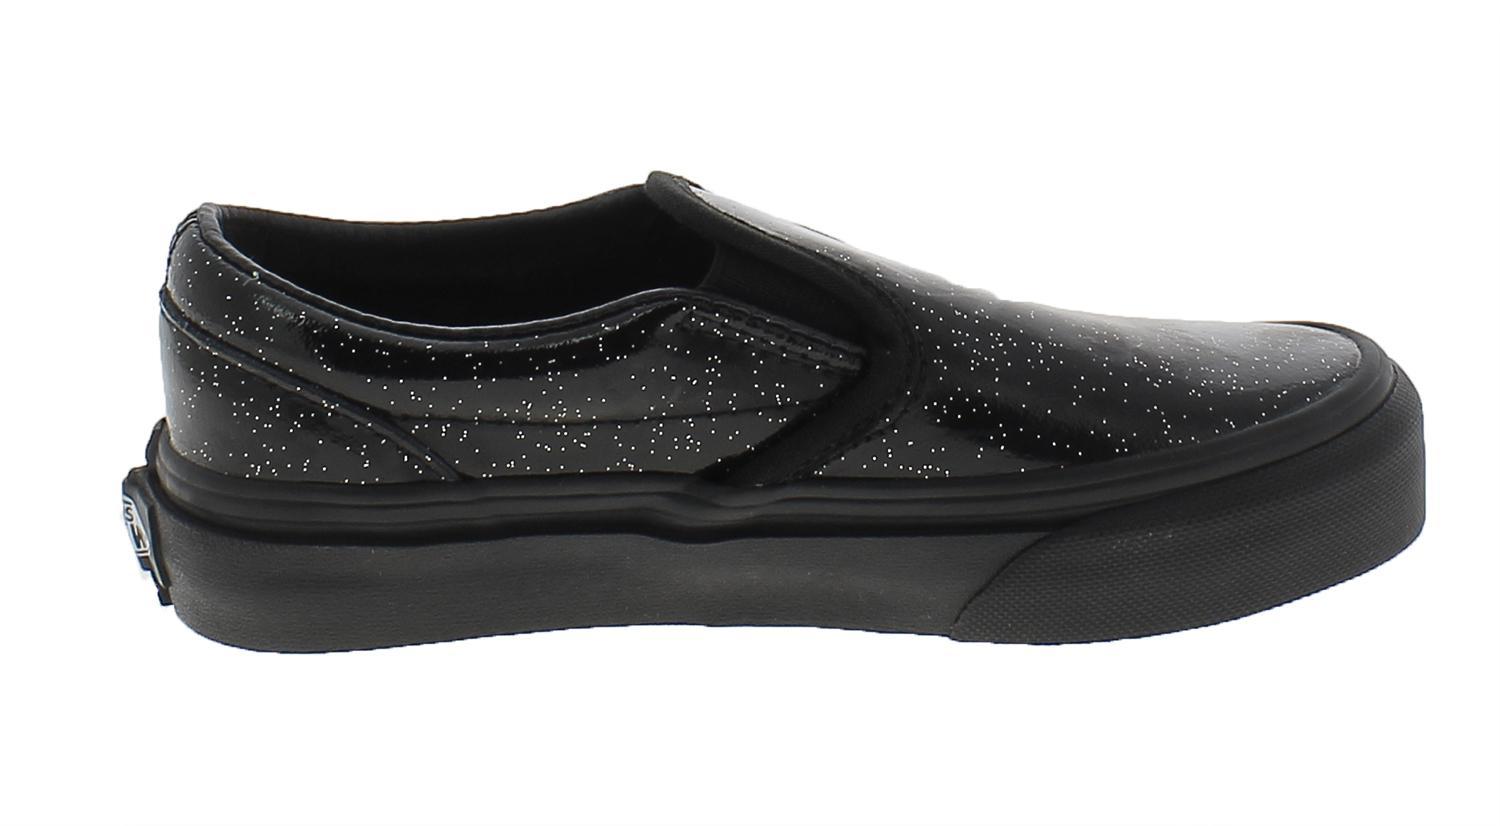 vans vans classic slip-on patent galaxy scarpe nere glitterate 1sqhvp